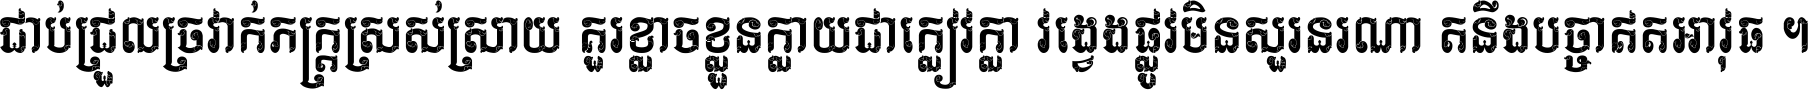 Kh Baphnom Vathana